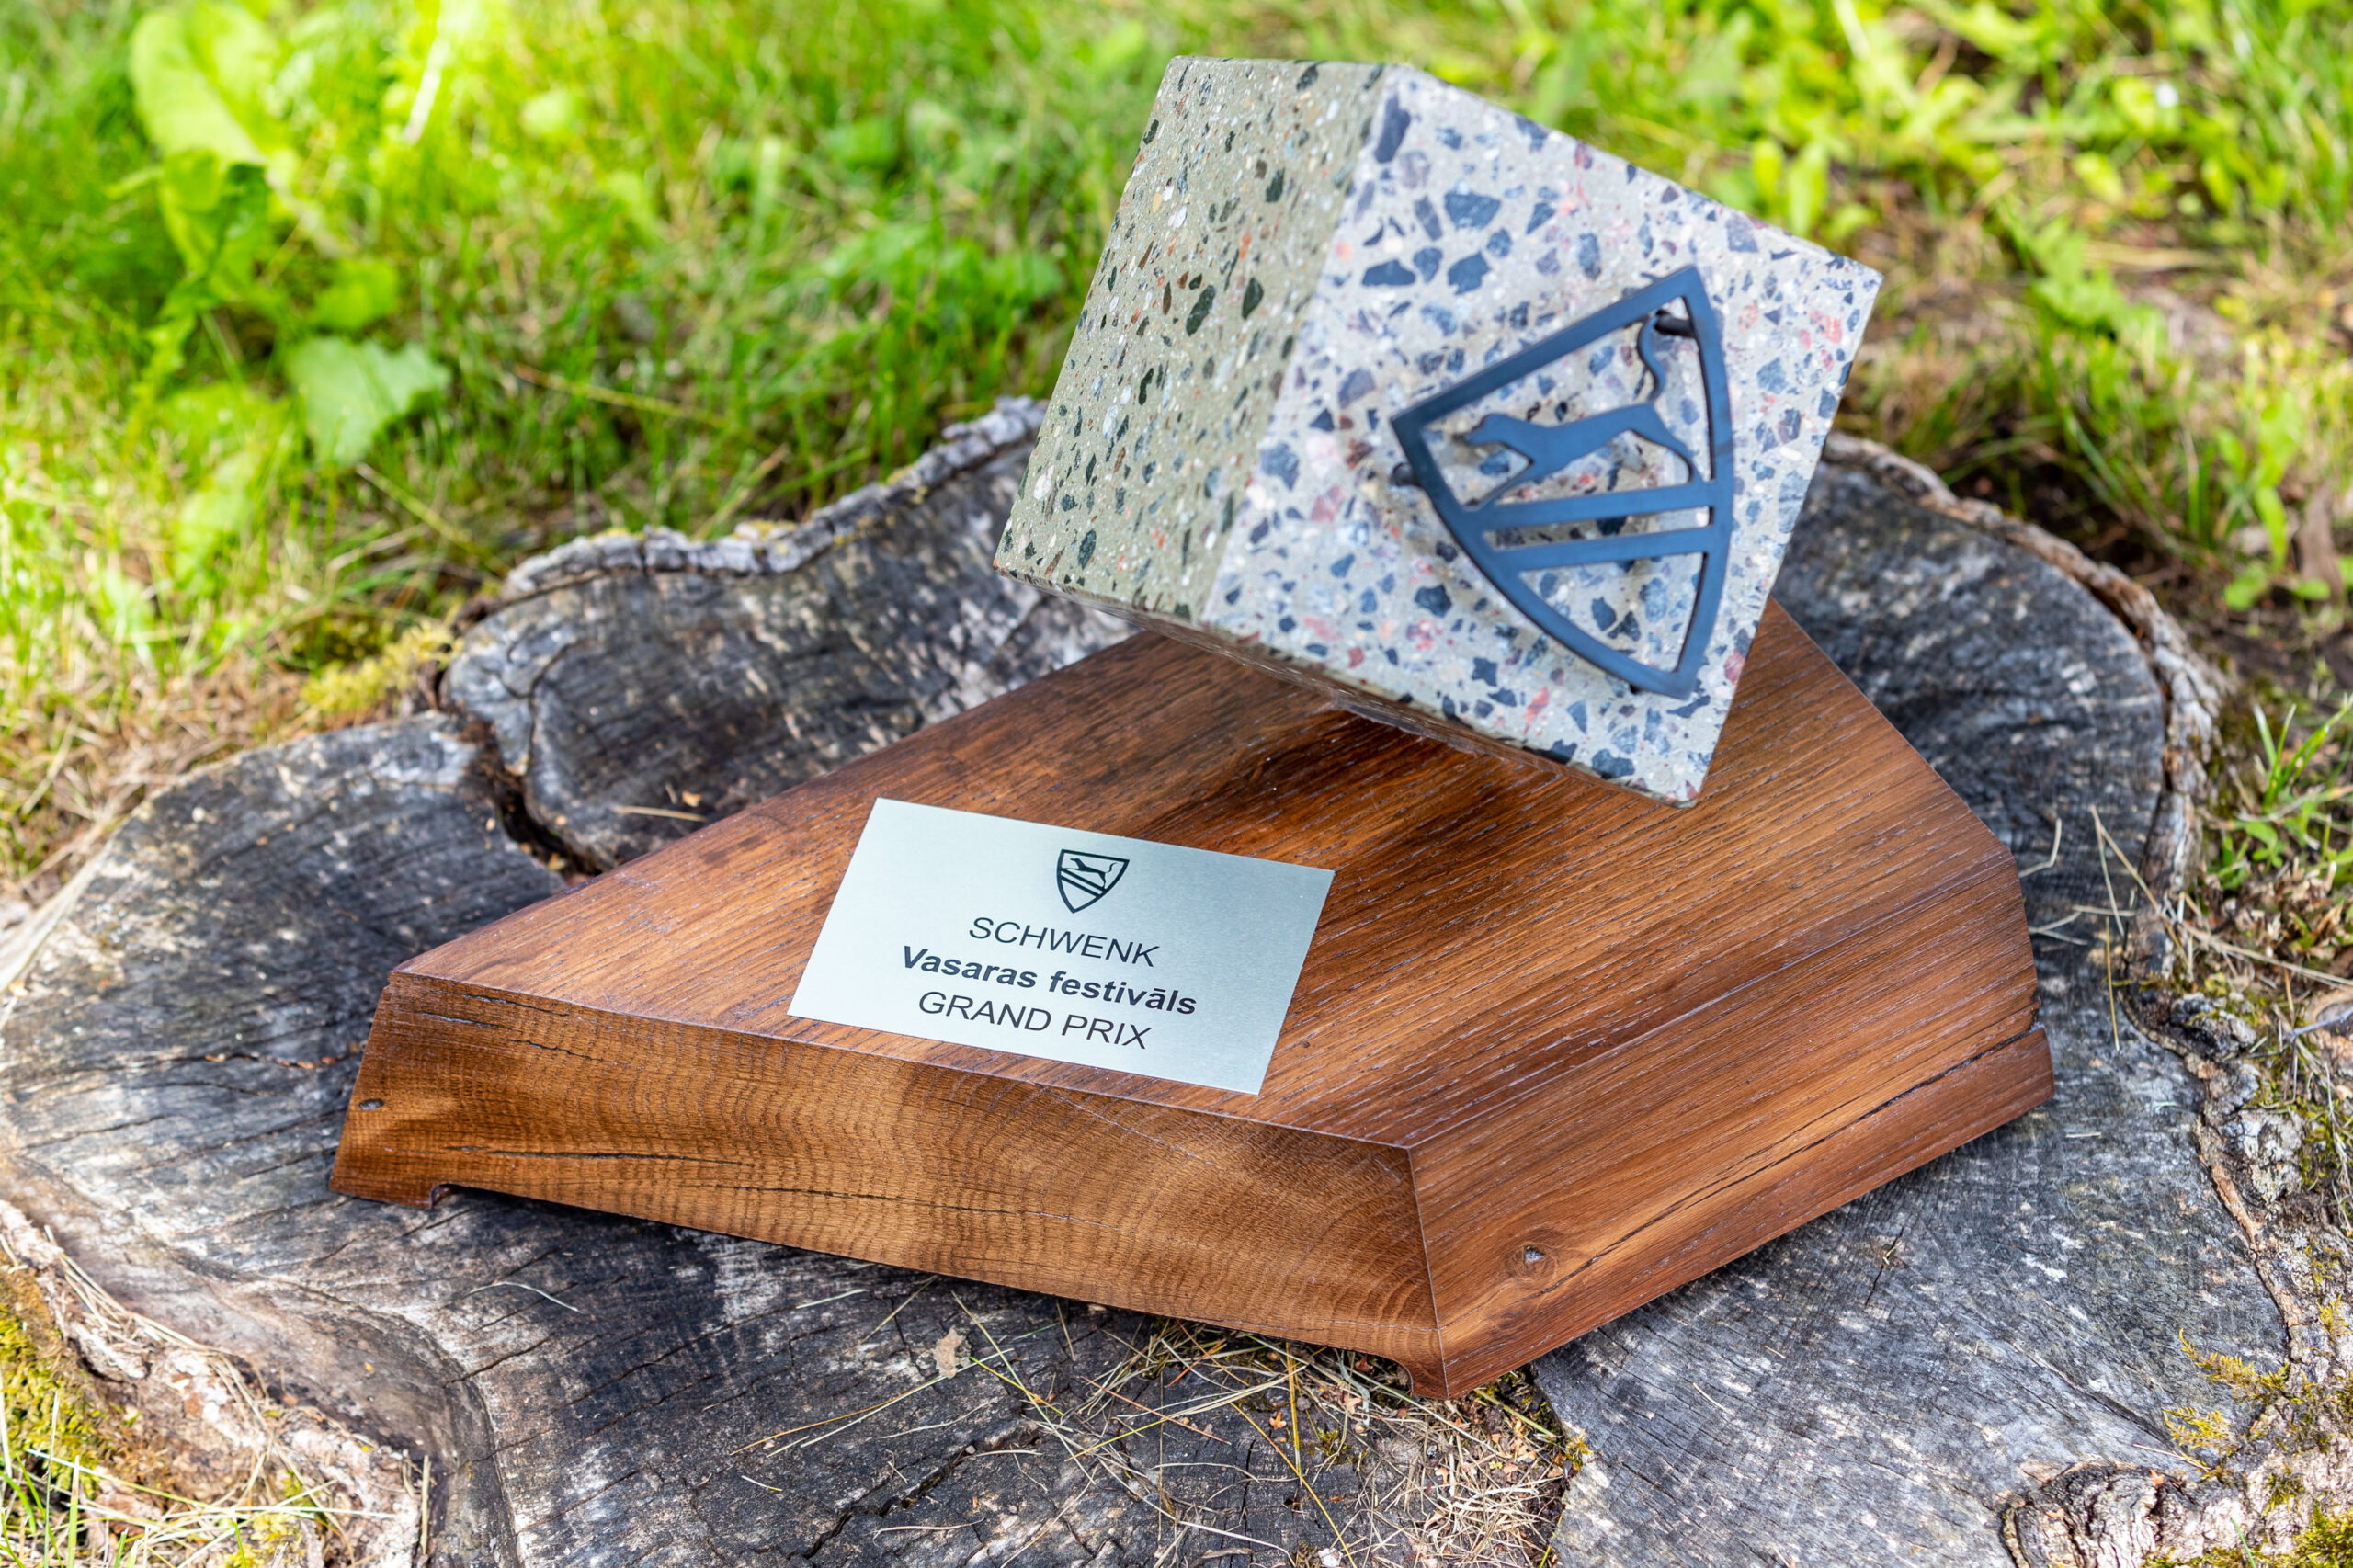 Prize - concrete cube on a wooden base